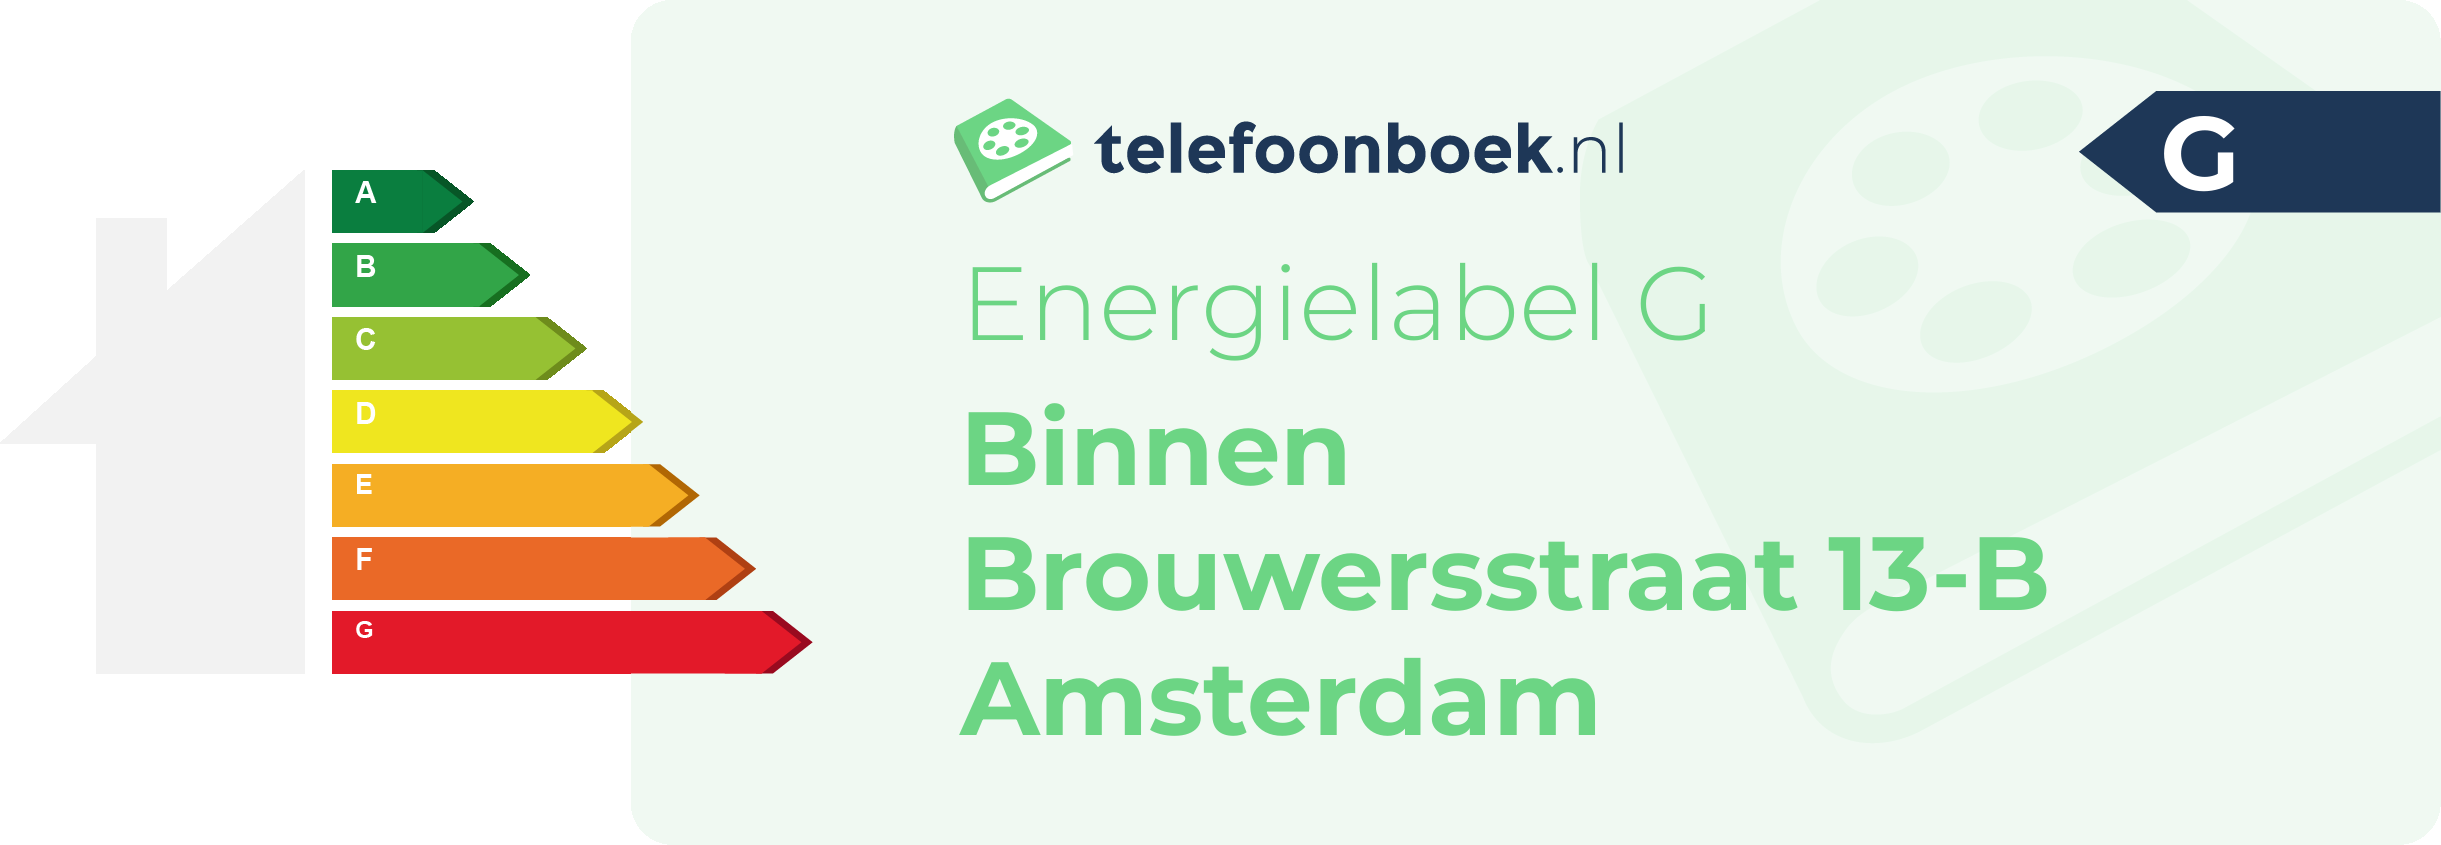 Energielabel Binnen Brouwersstraat 13-B Amsterdam